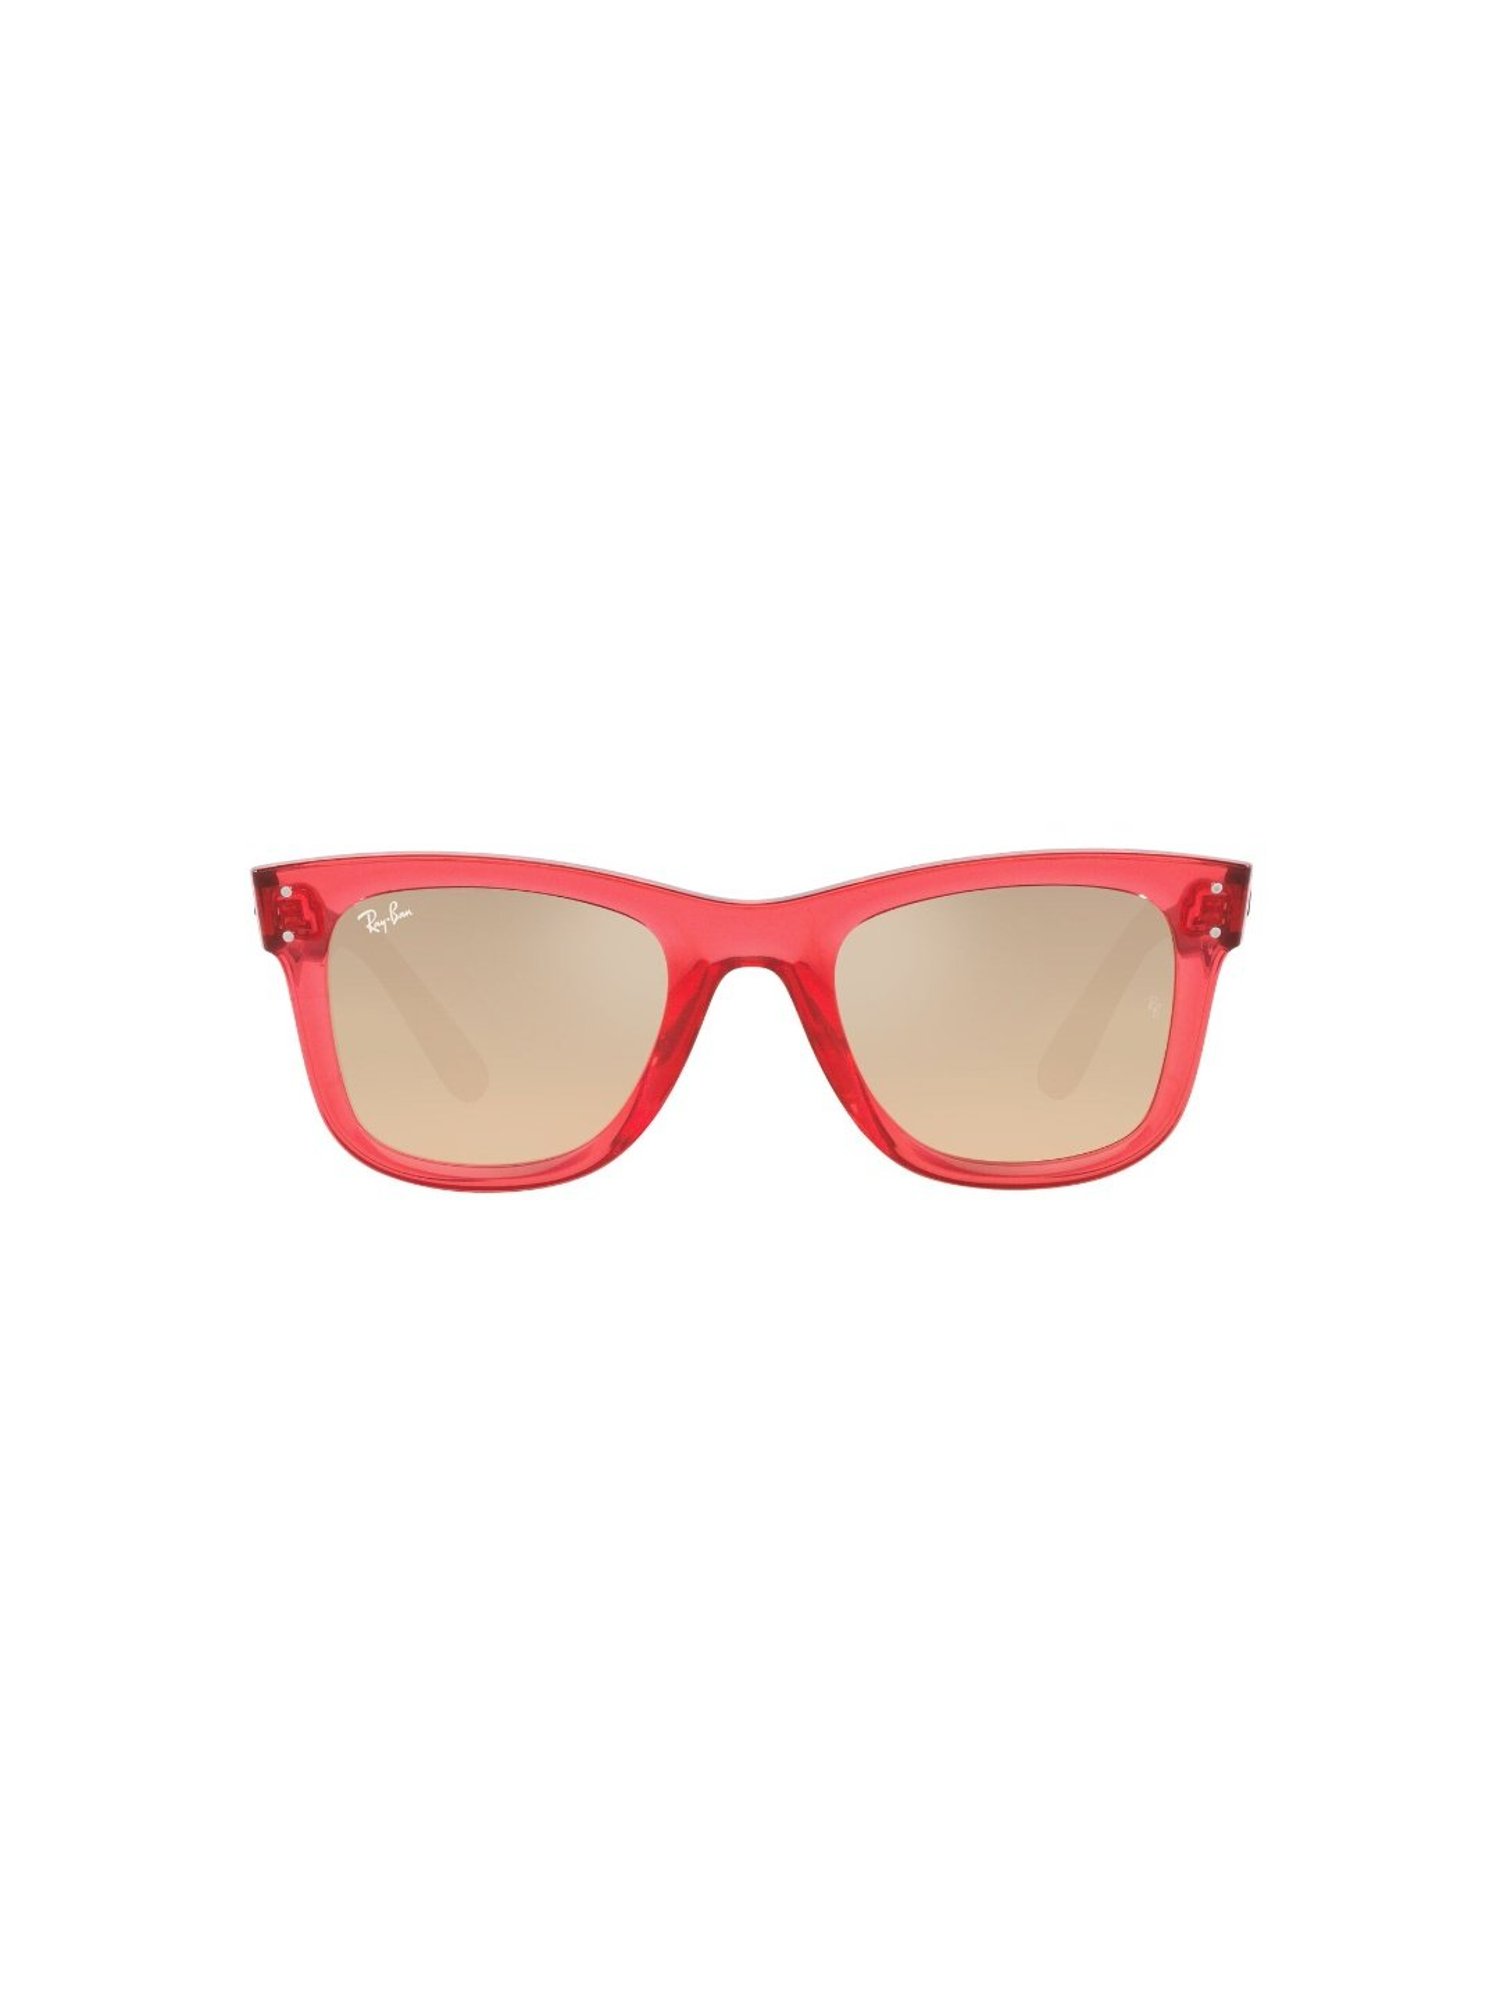 RAPTOR Aviator Sunglasses XXL Red Mirrored Lens | eBay